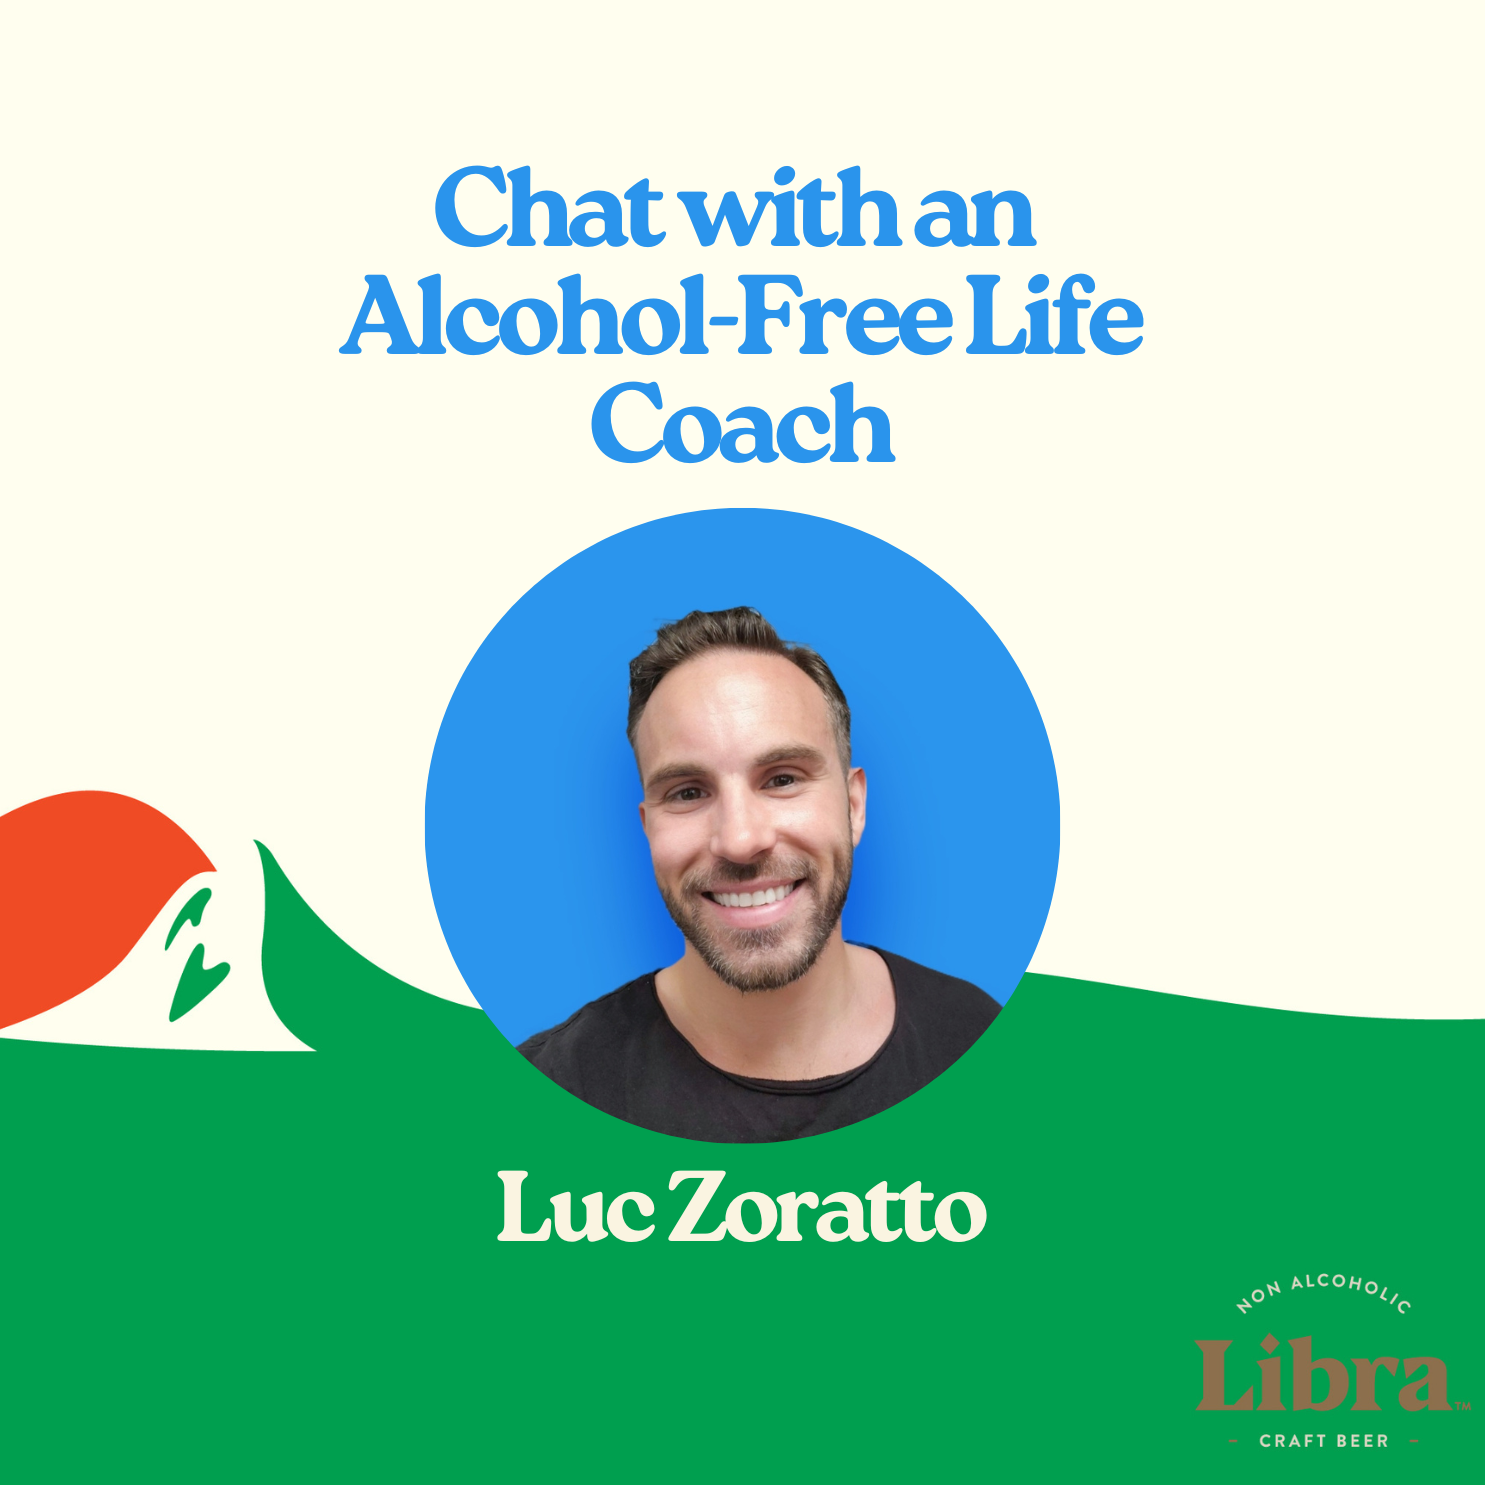 Life As An Alcohol-Free Life Coach